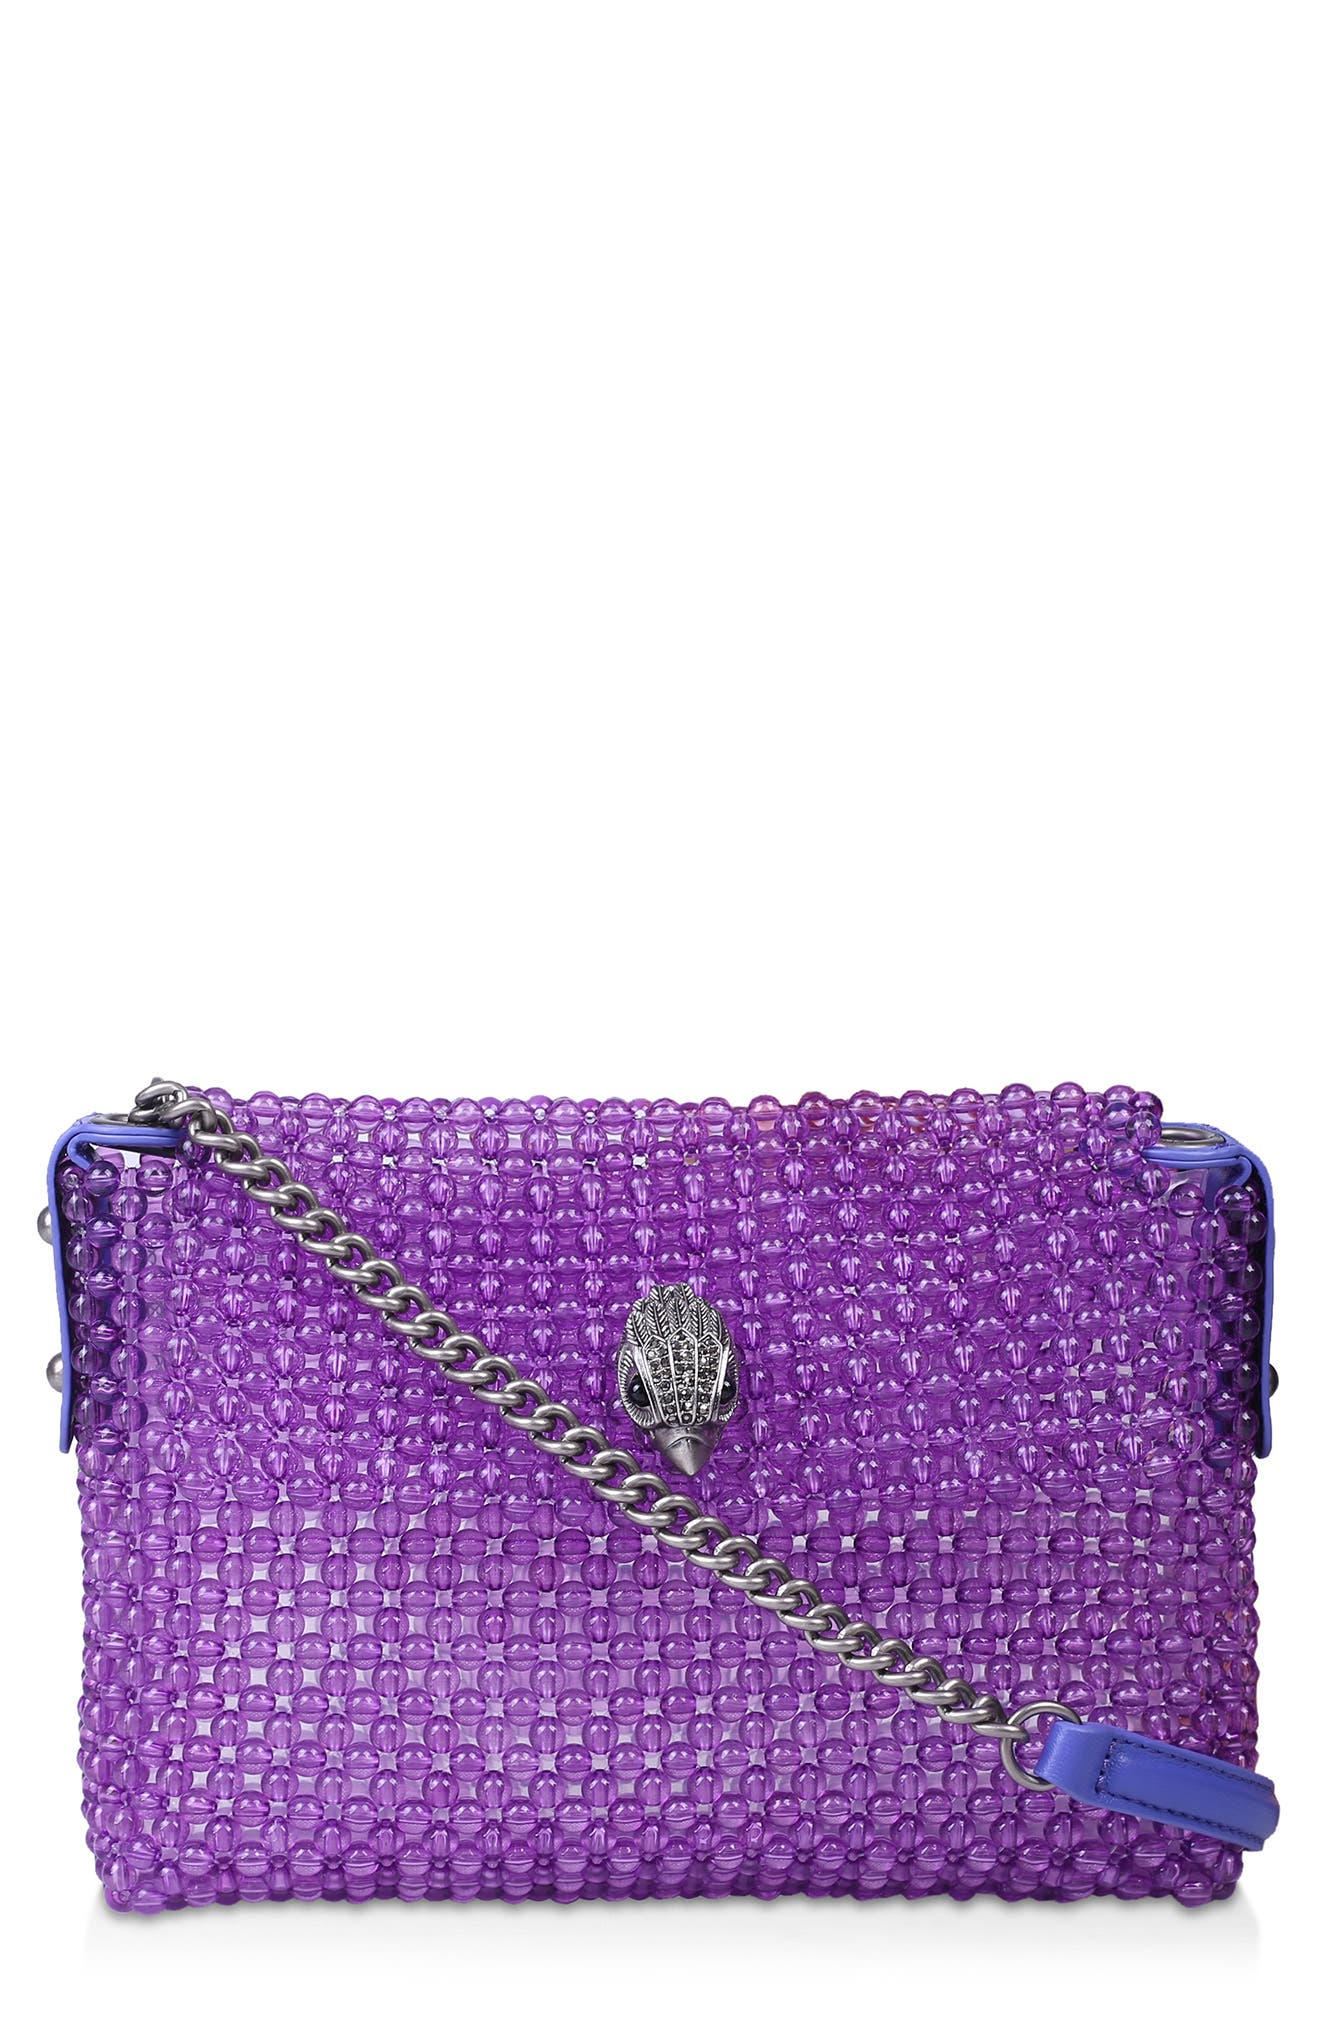 Kurt Geiger Leather Cross-body Bag in Light Purple Purple Womens Bags Crossbody bags and purses 